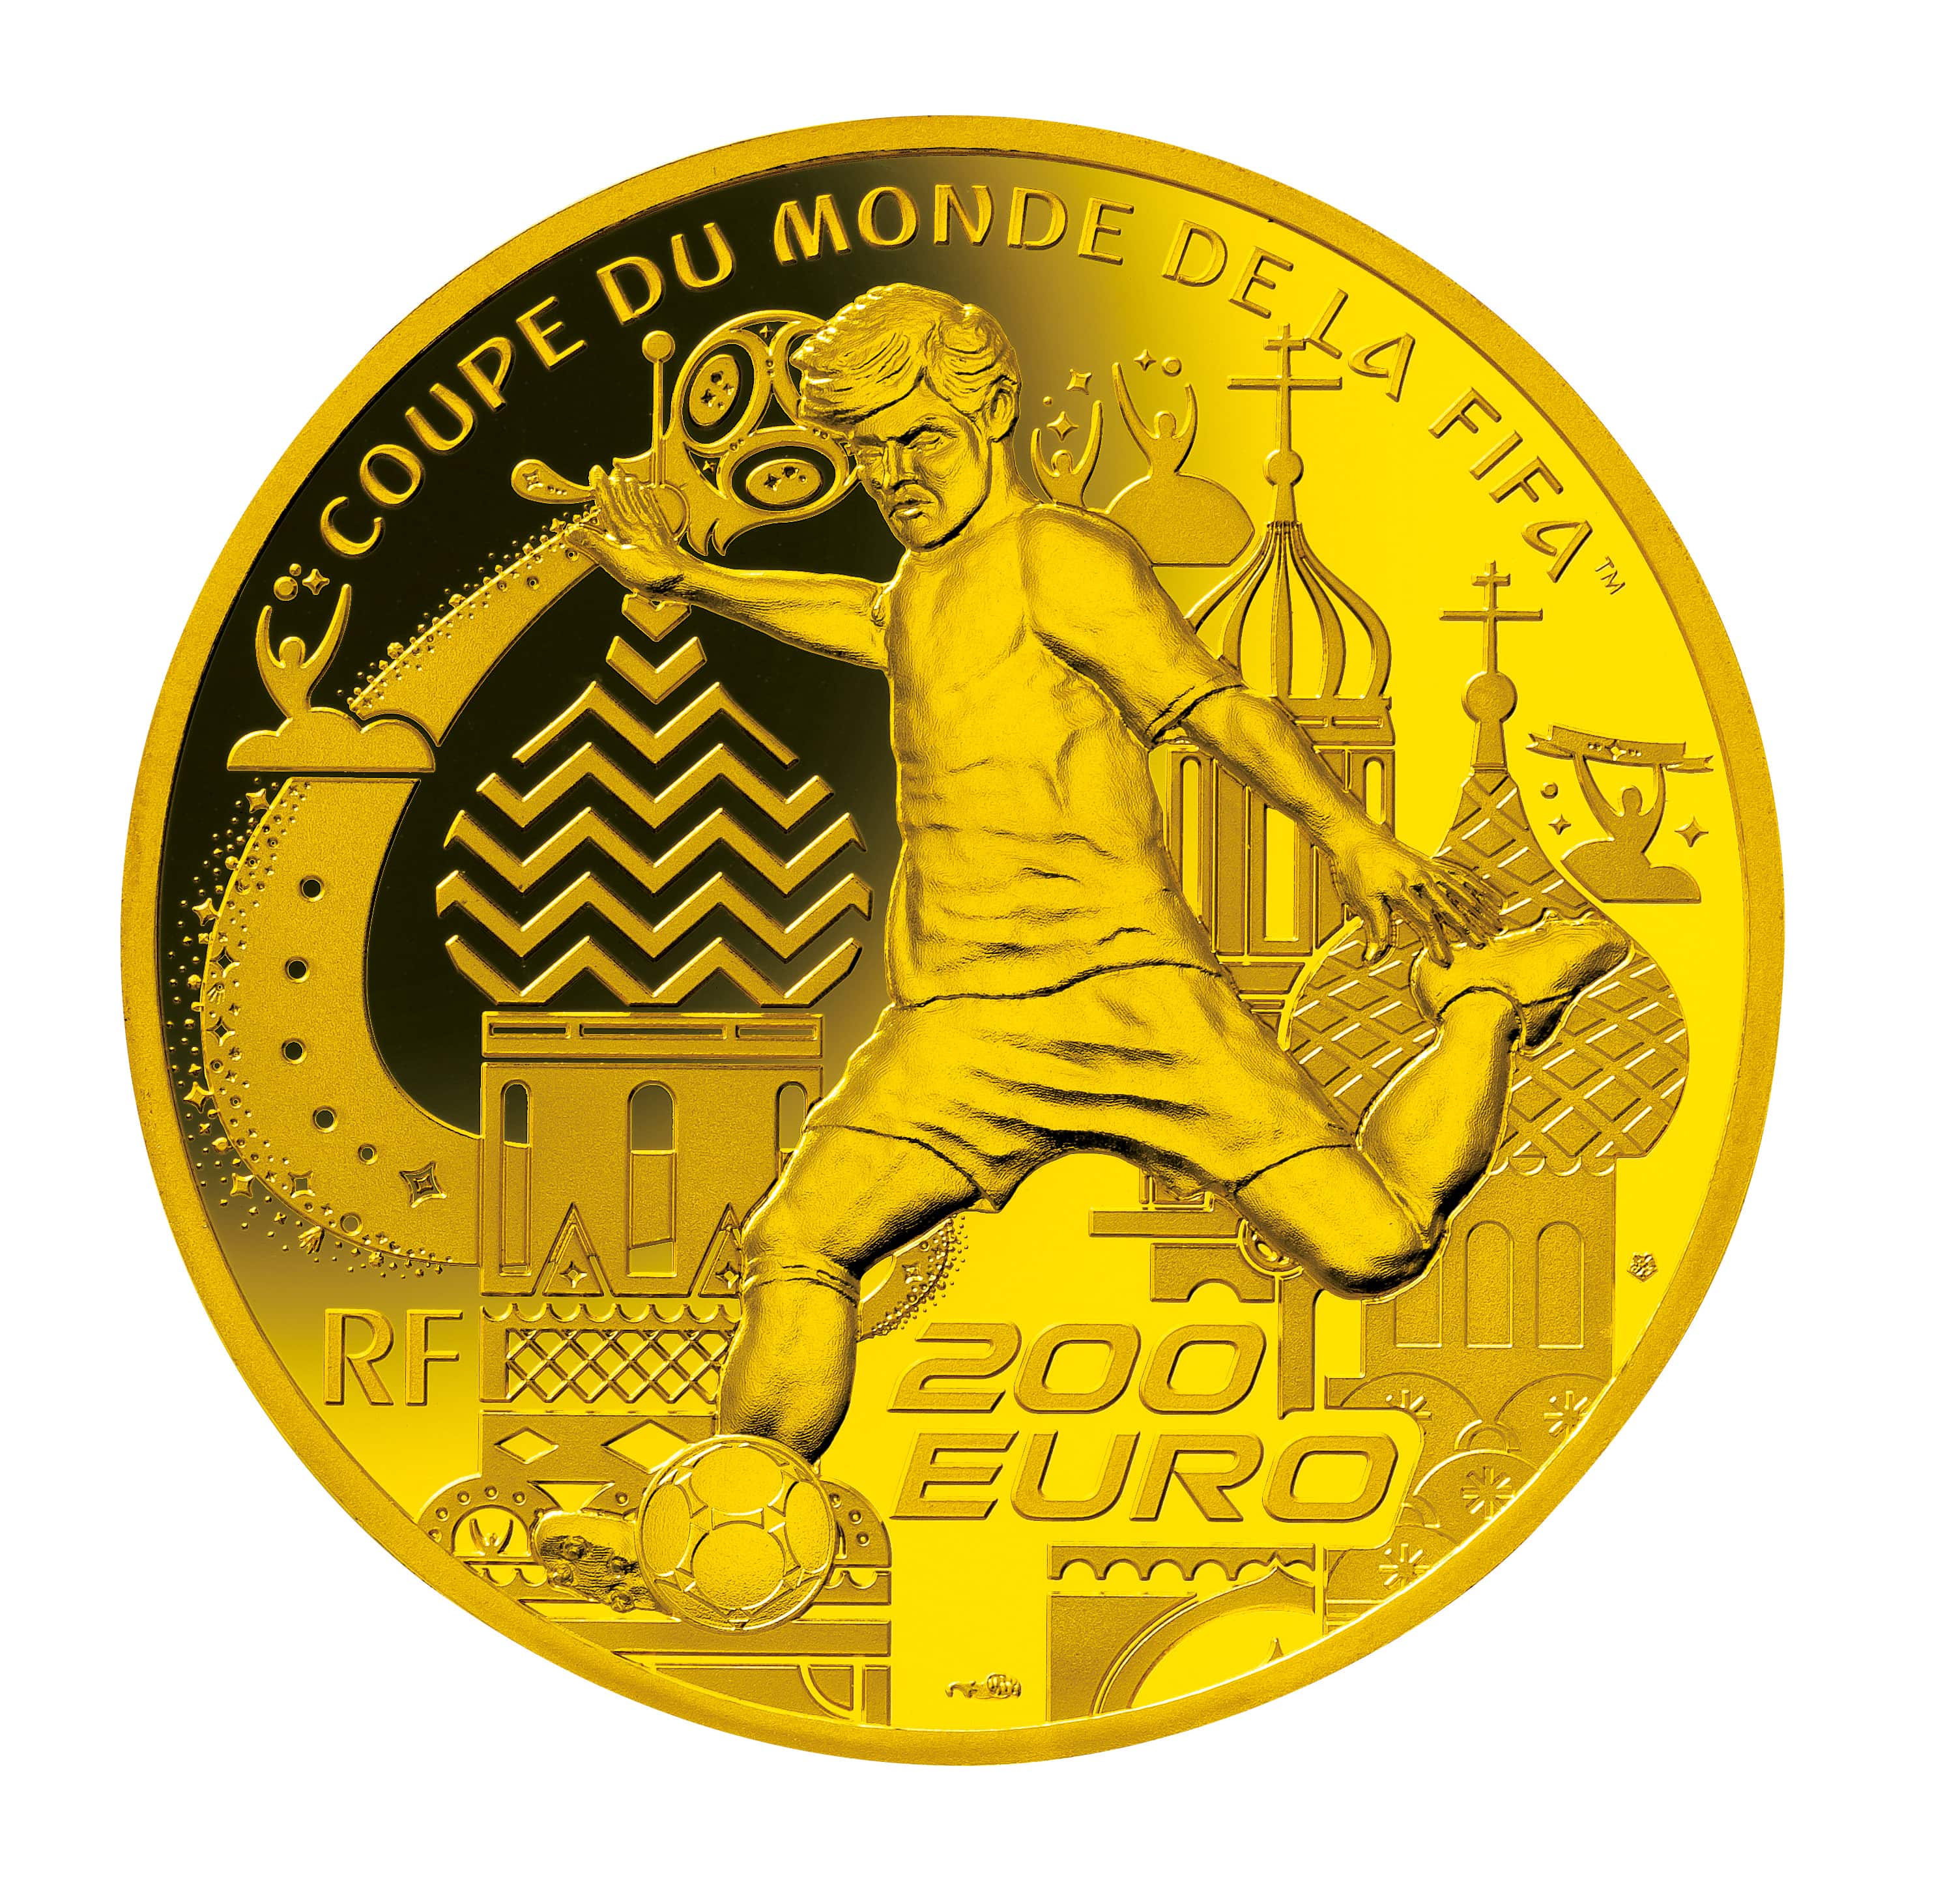 Fifaワールドカップロシア大会公式記念コイン 最終予約販売 の取次販売開始について ニュースリリース りそなホールディングス